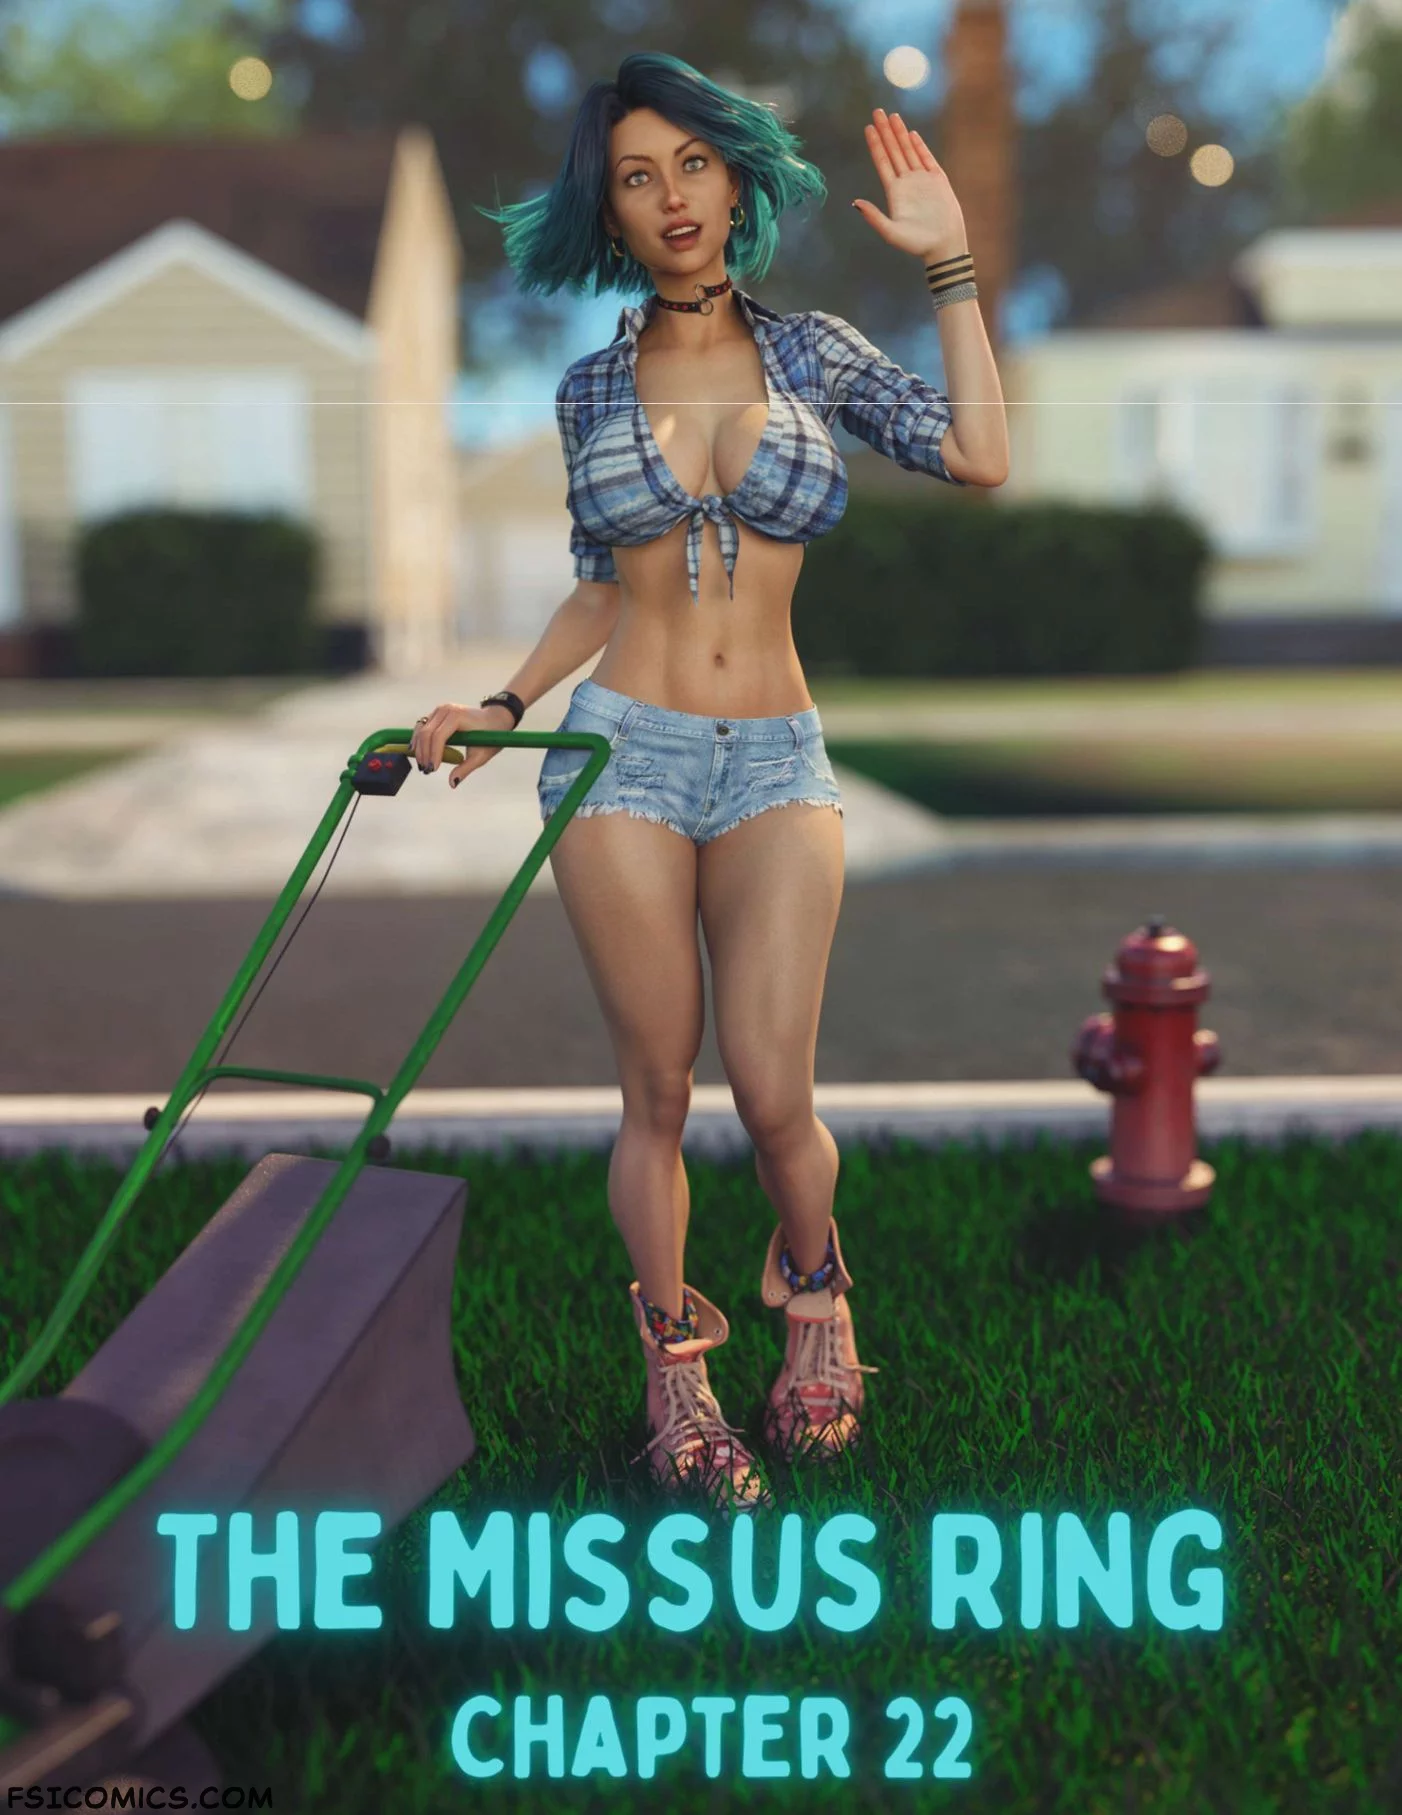 The Missus Ring Chapter 22 - Lexx228 | RawlyRawls - 15 - FSIComics